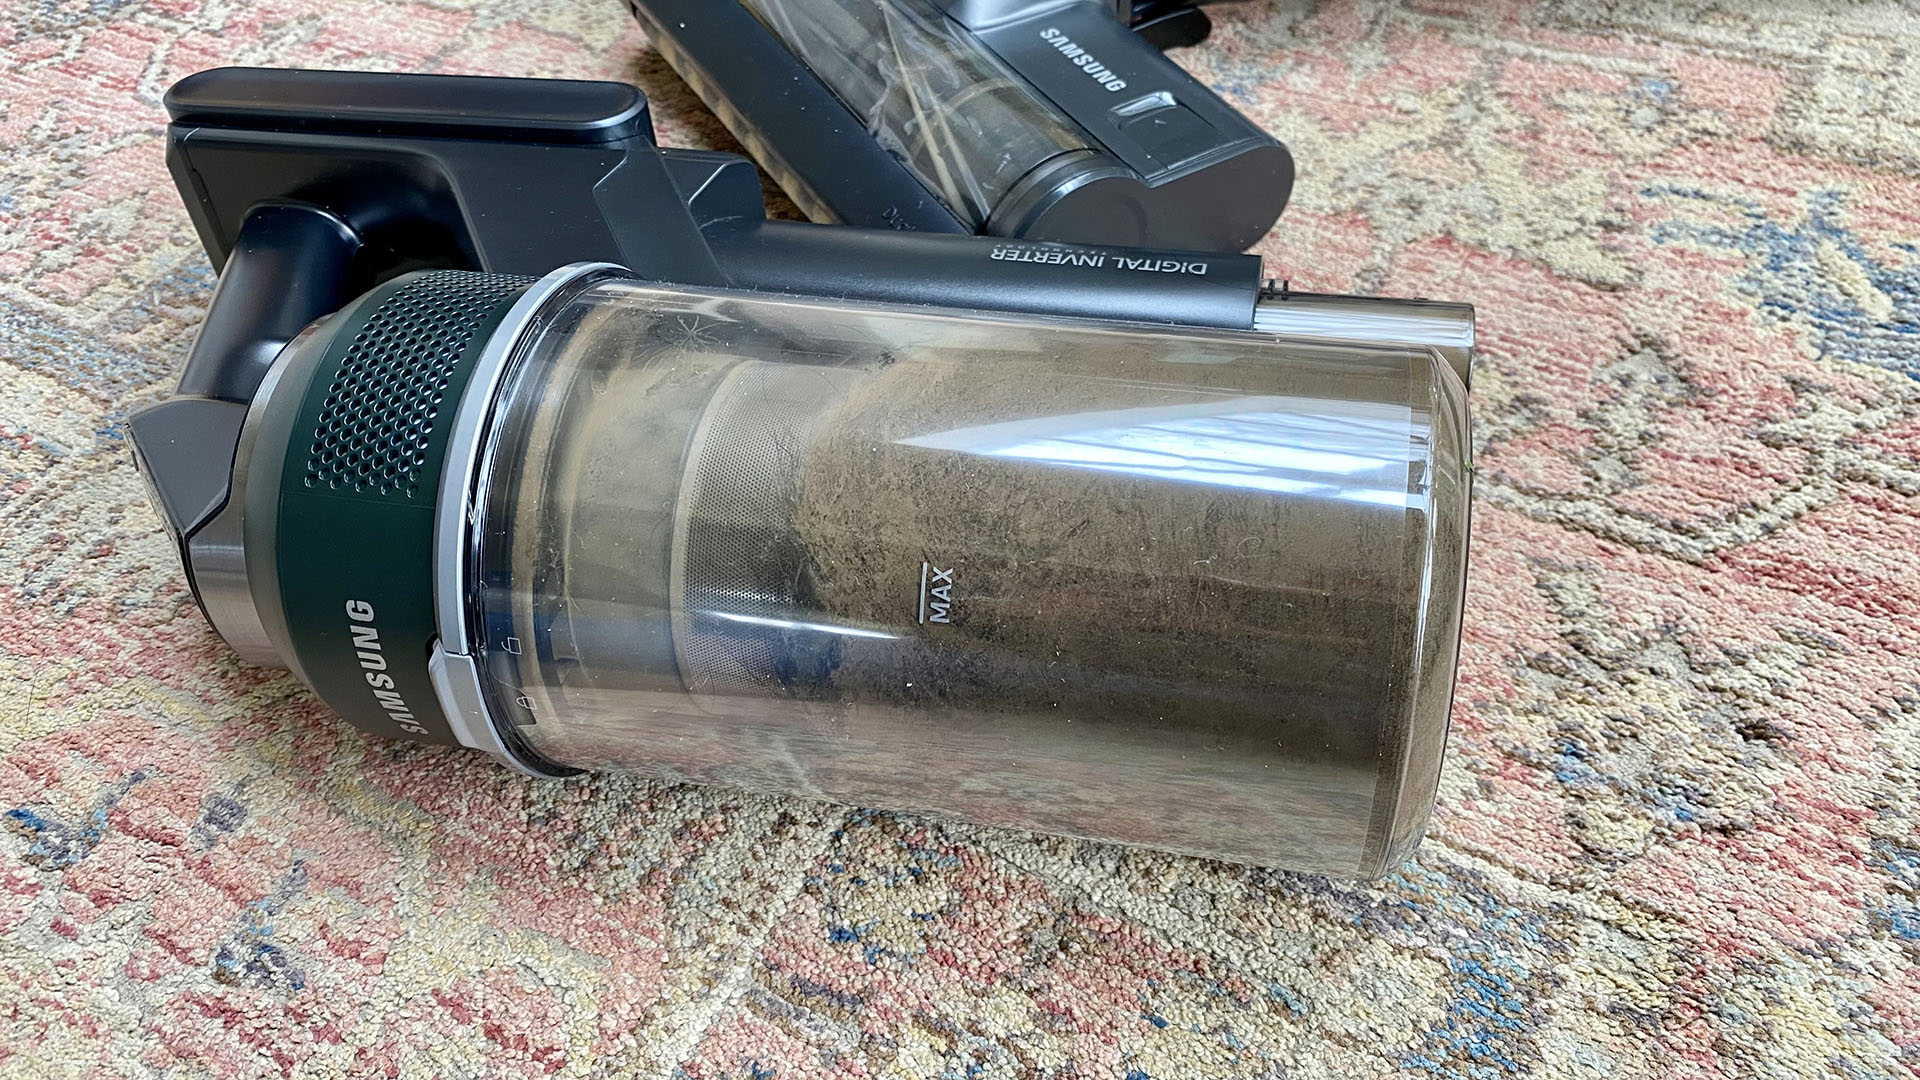 Close up of dust bin on Samsung Jet 85 Pet vacuum cleaner